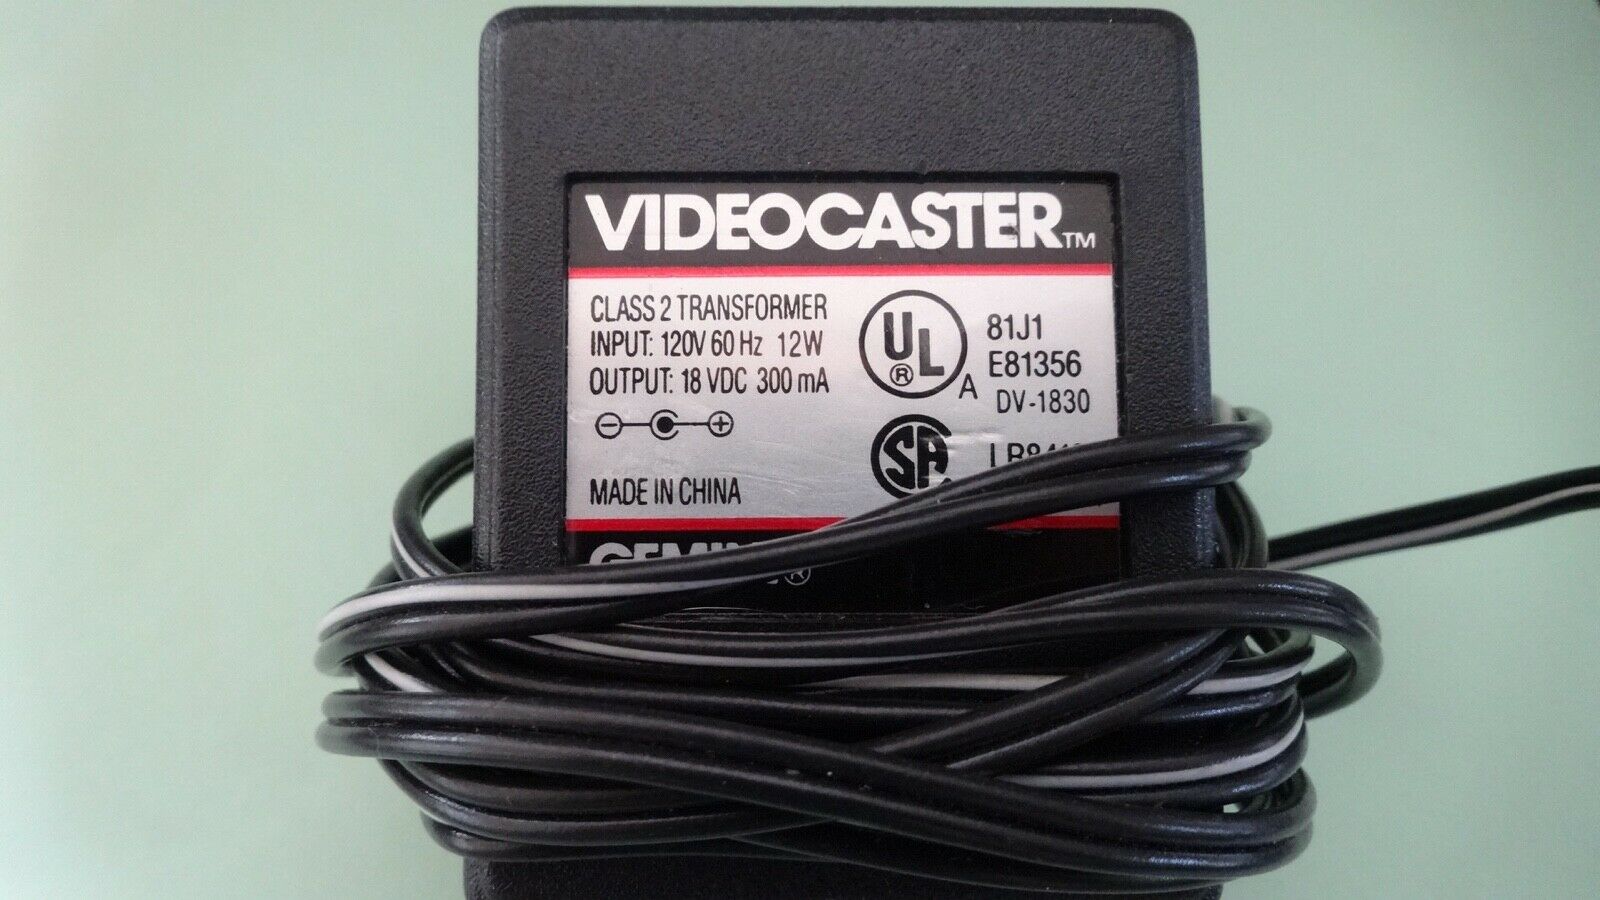 New 18V 300mA Videocaster DV-1830 Class 2 Transformer Power Supply Ac Adapter